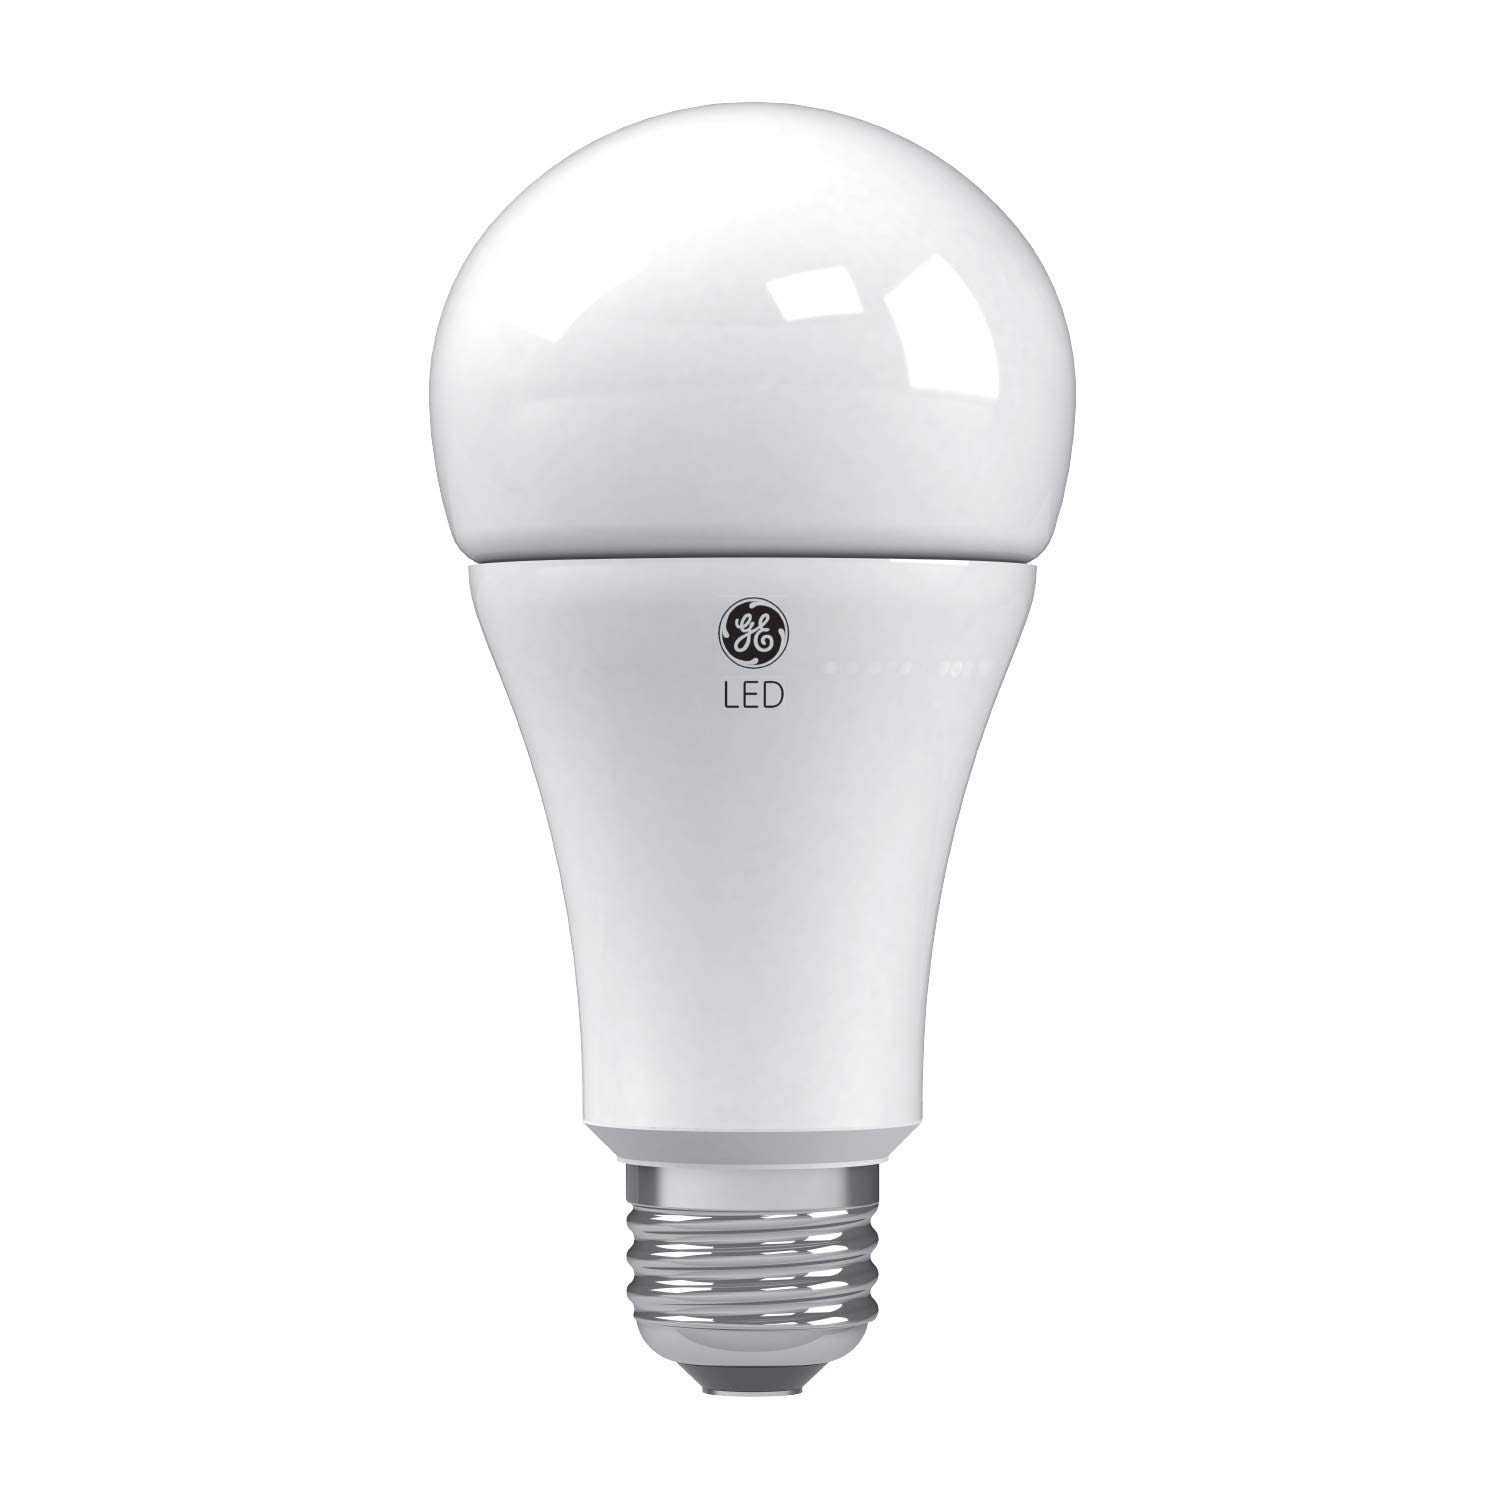 GE Lighting 24132 LED 3 Way Light Bulb - Soft White, 5W, 20W and 19W